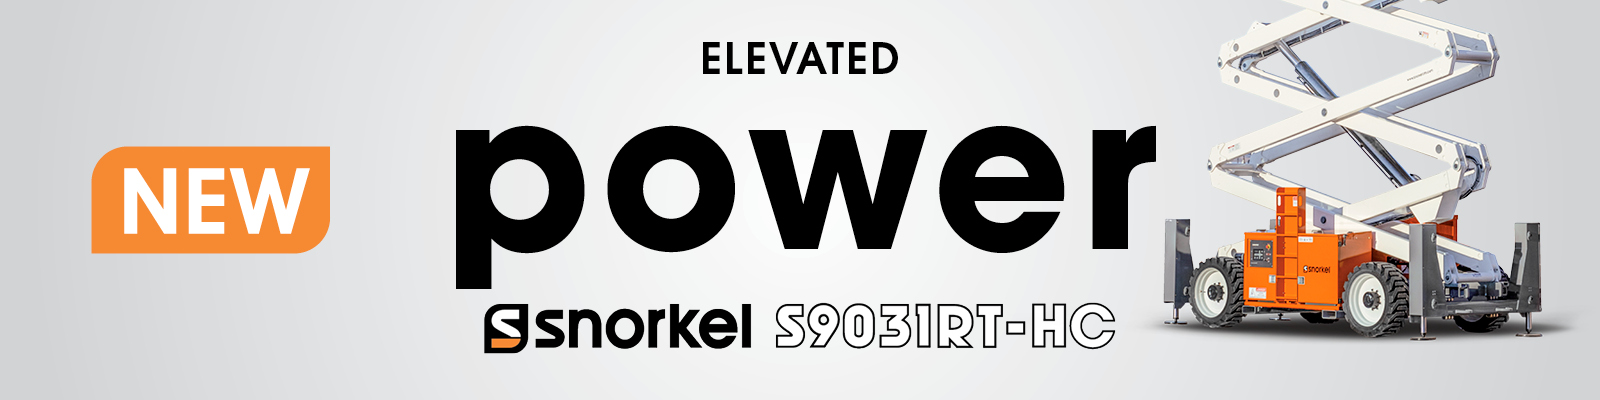 Elevated Power Snorkel S9031RT-HC rough terrain scissor lift